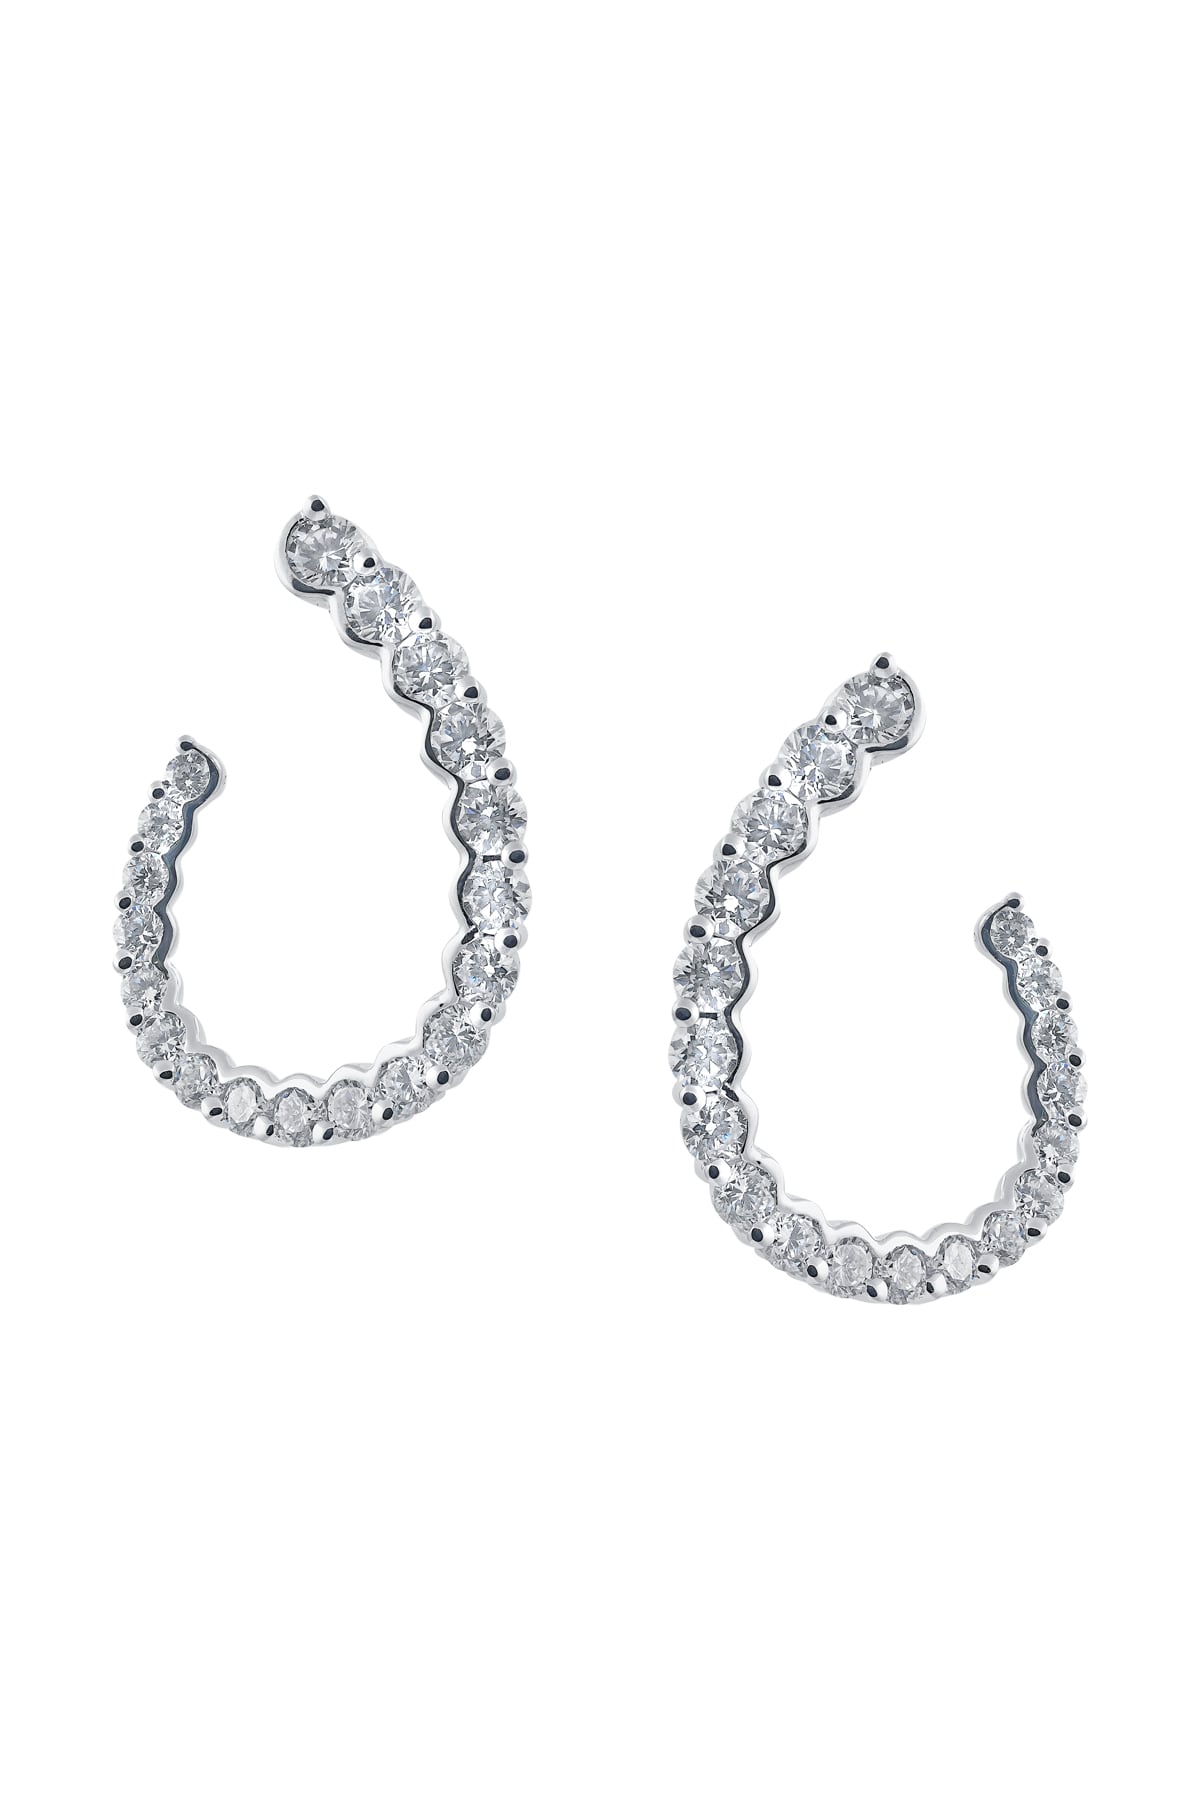 Offset Semi-Circular Diamond Drop Earrings from LeGassick Jewellery Gold Coast.